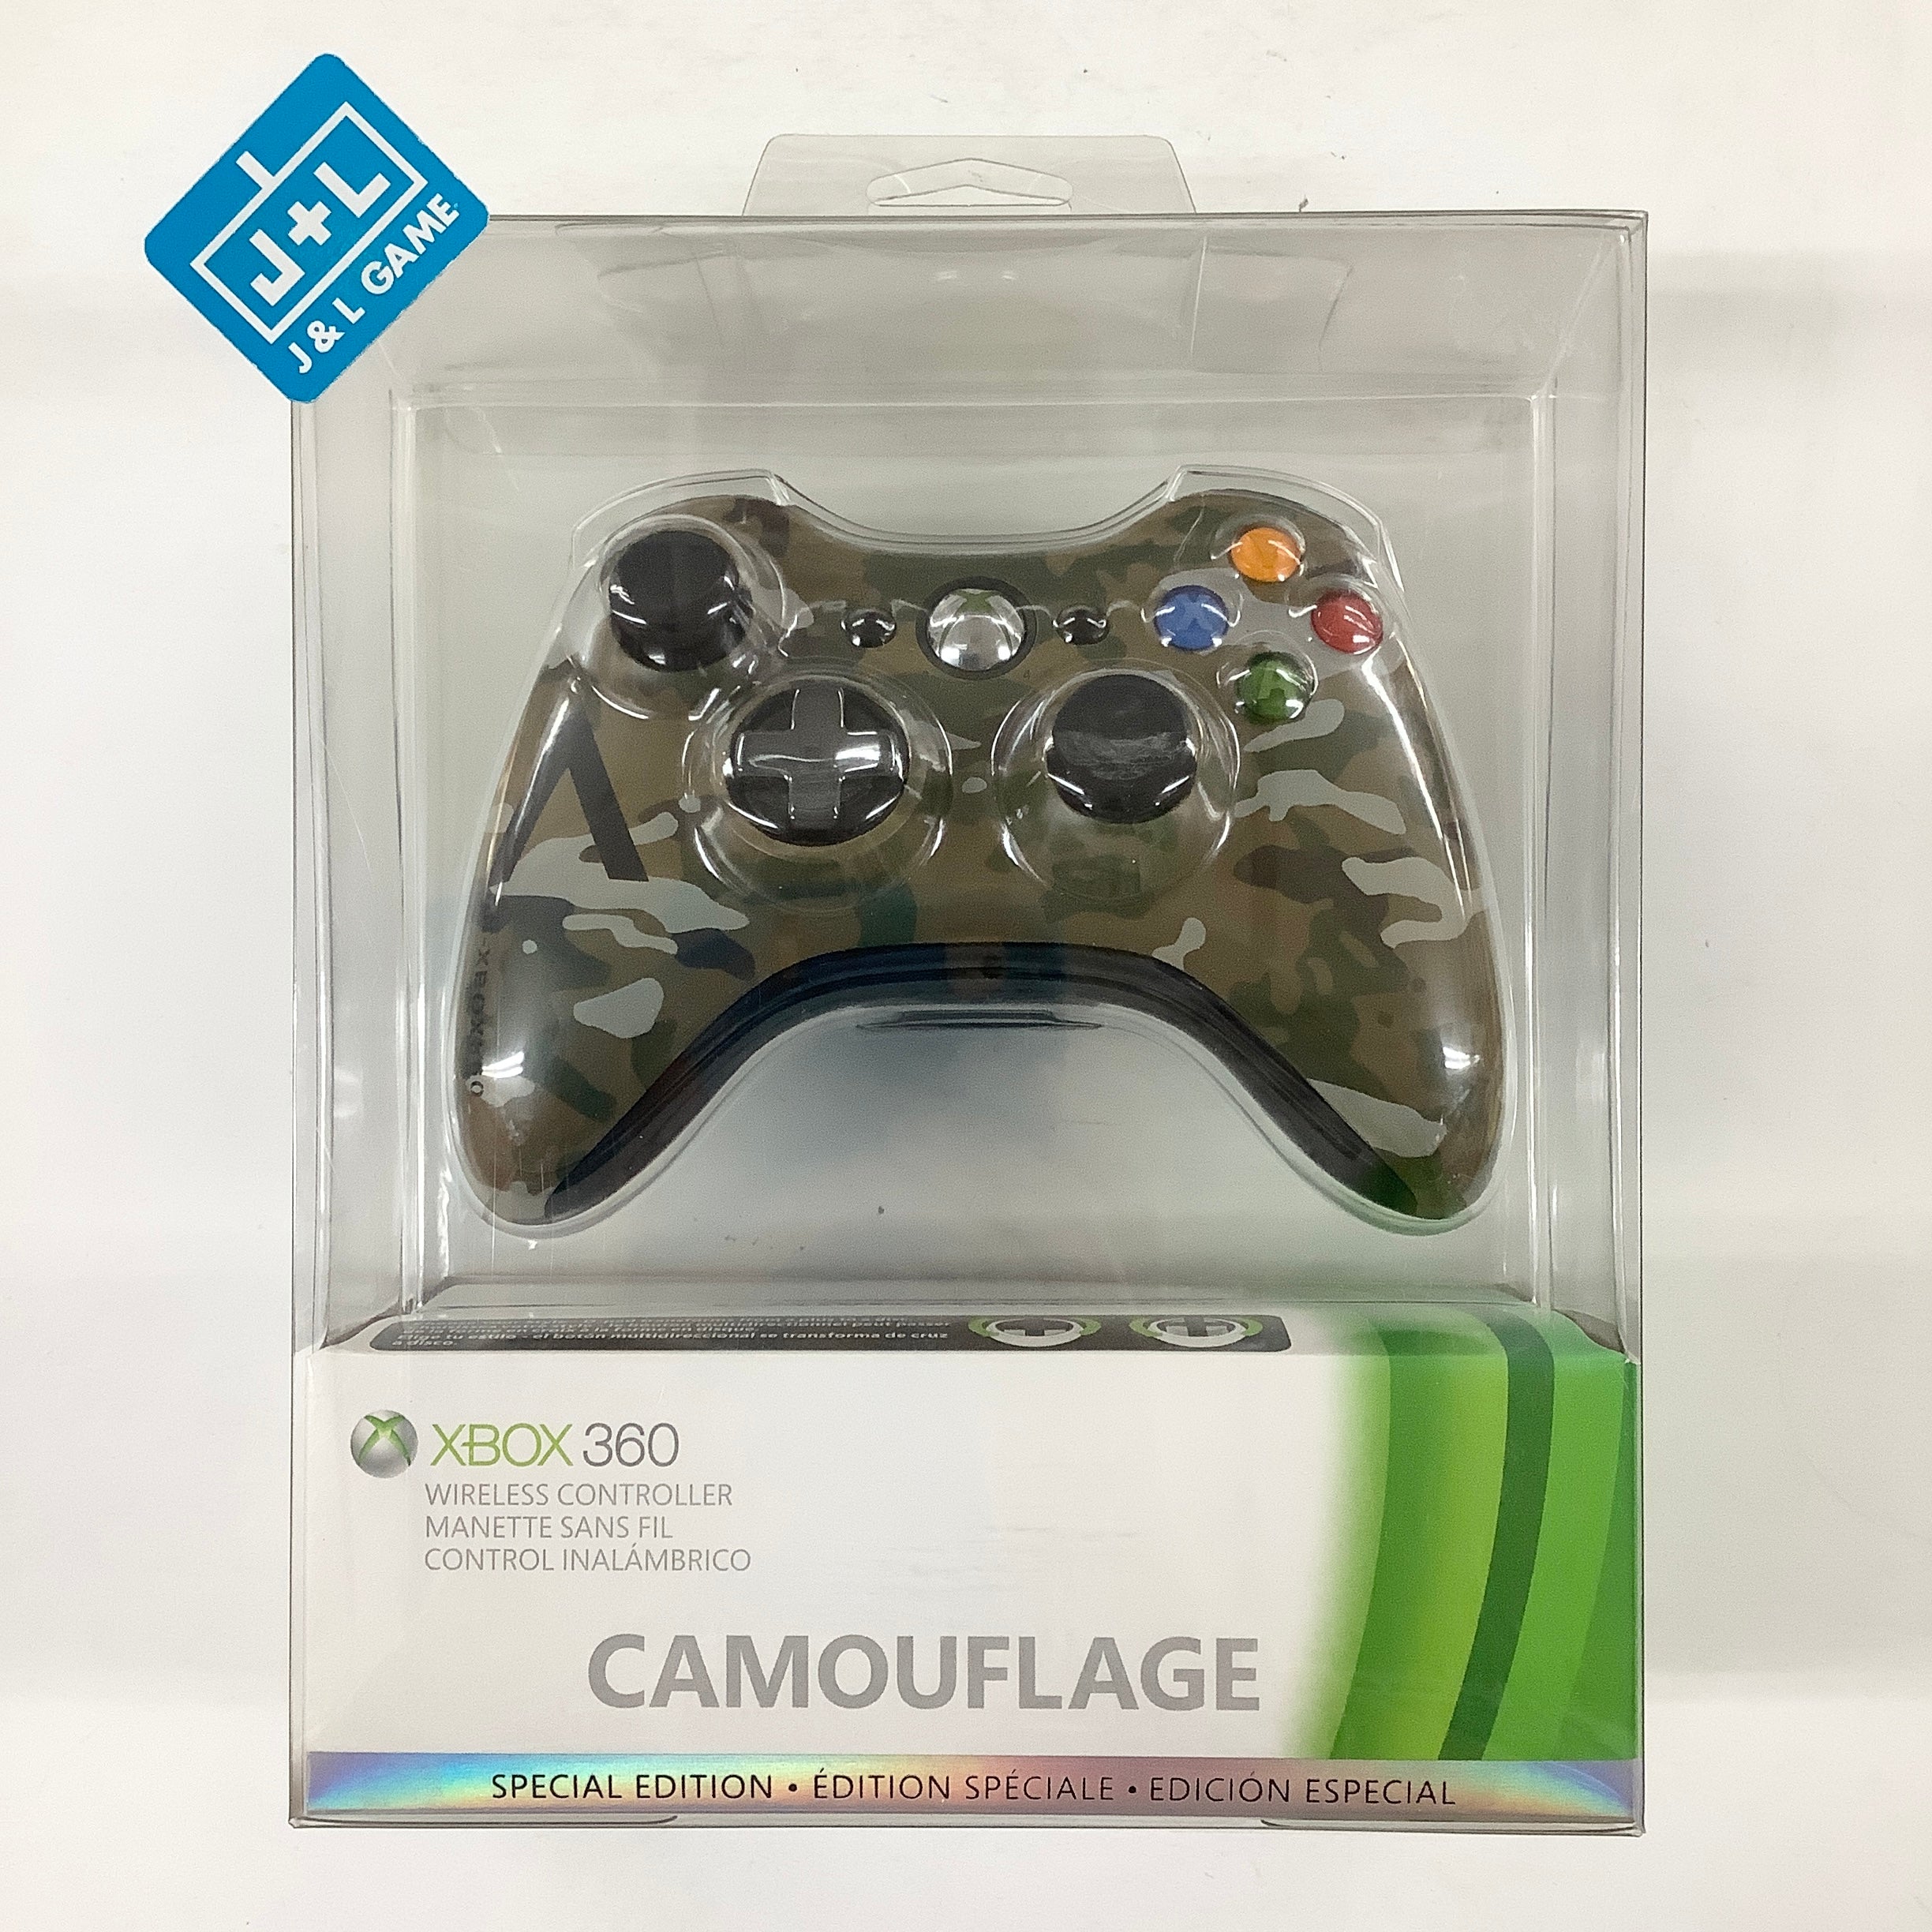 Microsoft Xbox 360 Wireless Controller - Camouflage - Xbox 360 Accessories Microsoft   